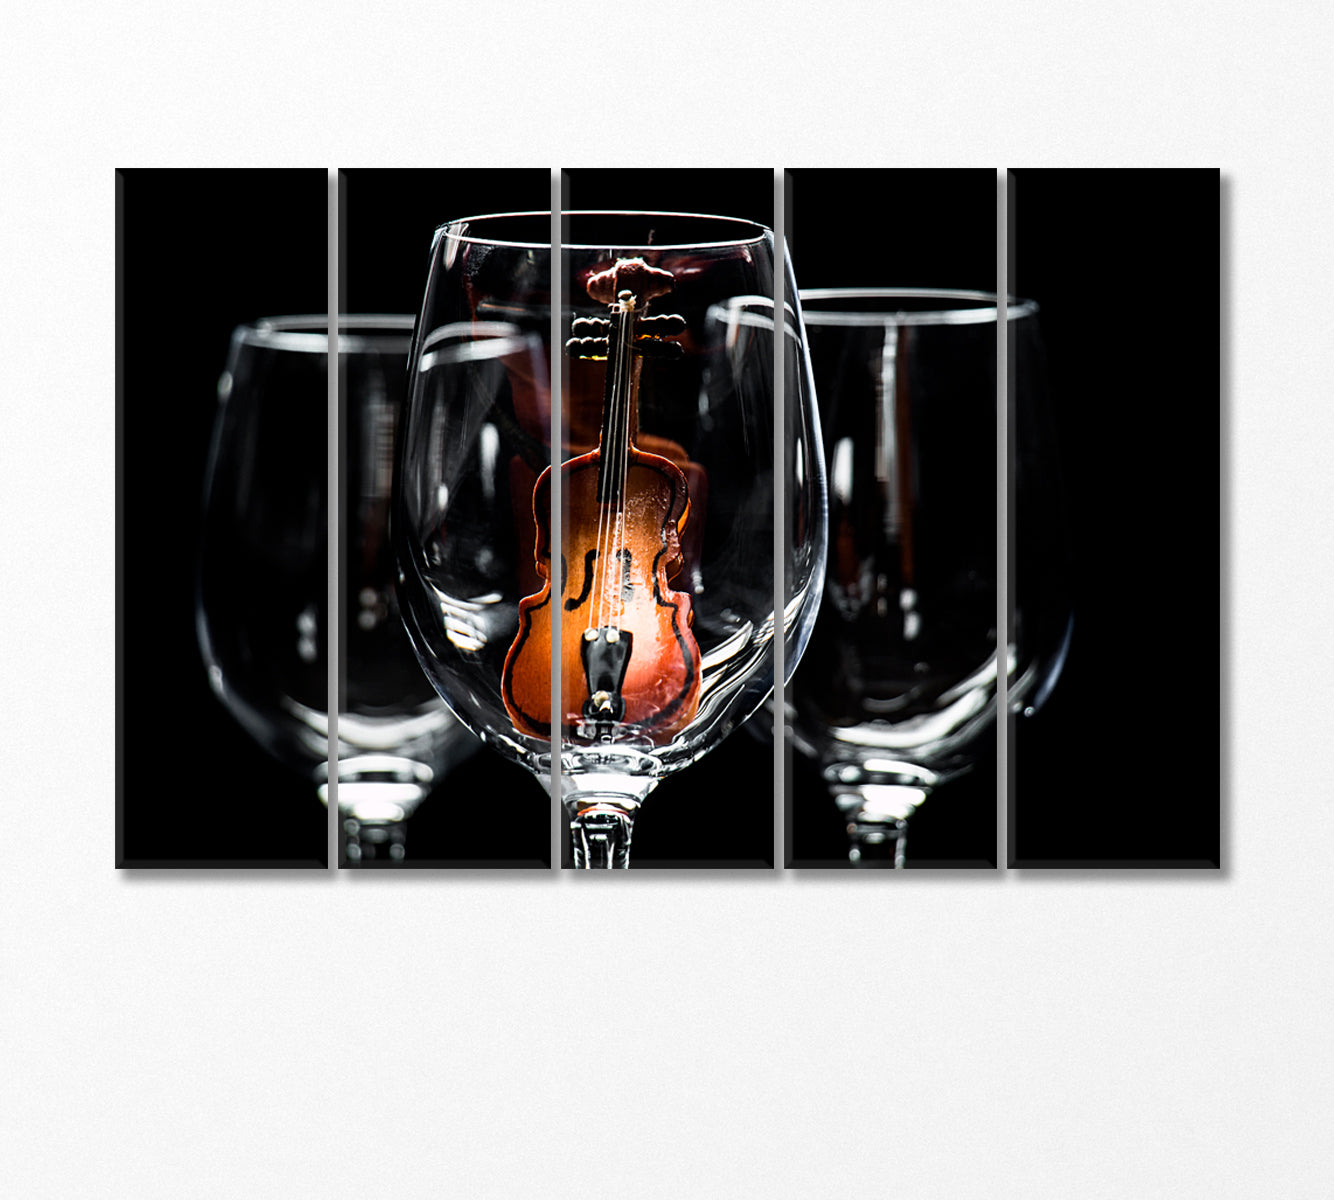 Miniature Violin in Glass Canvas Print-Canvas Print-CetArt-5 Panels-36x24 inches-CetArt